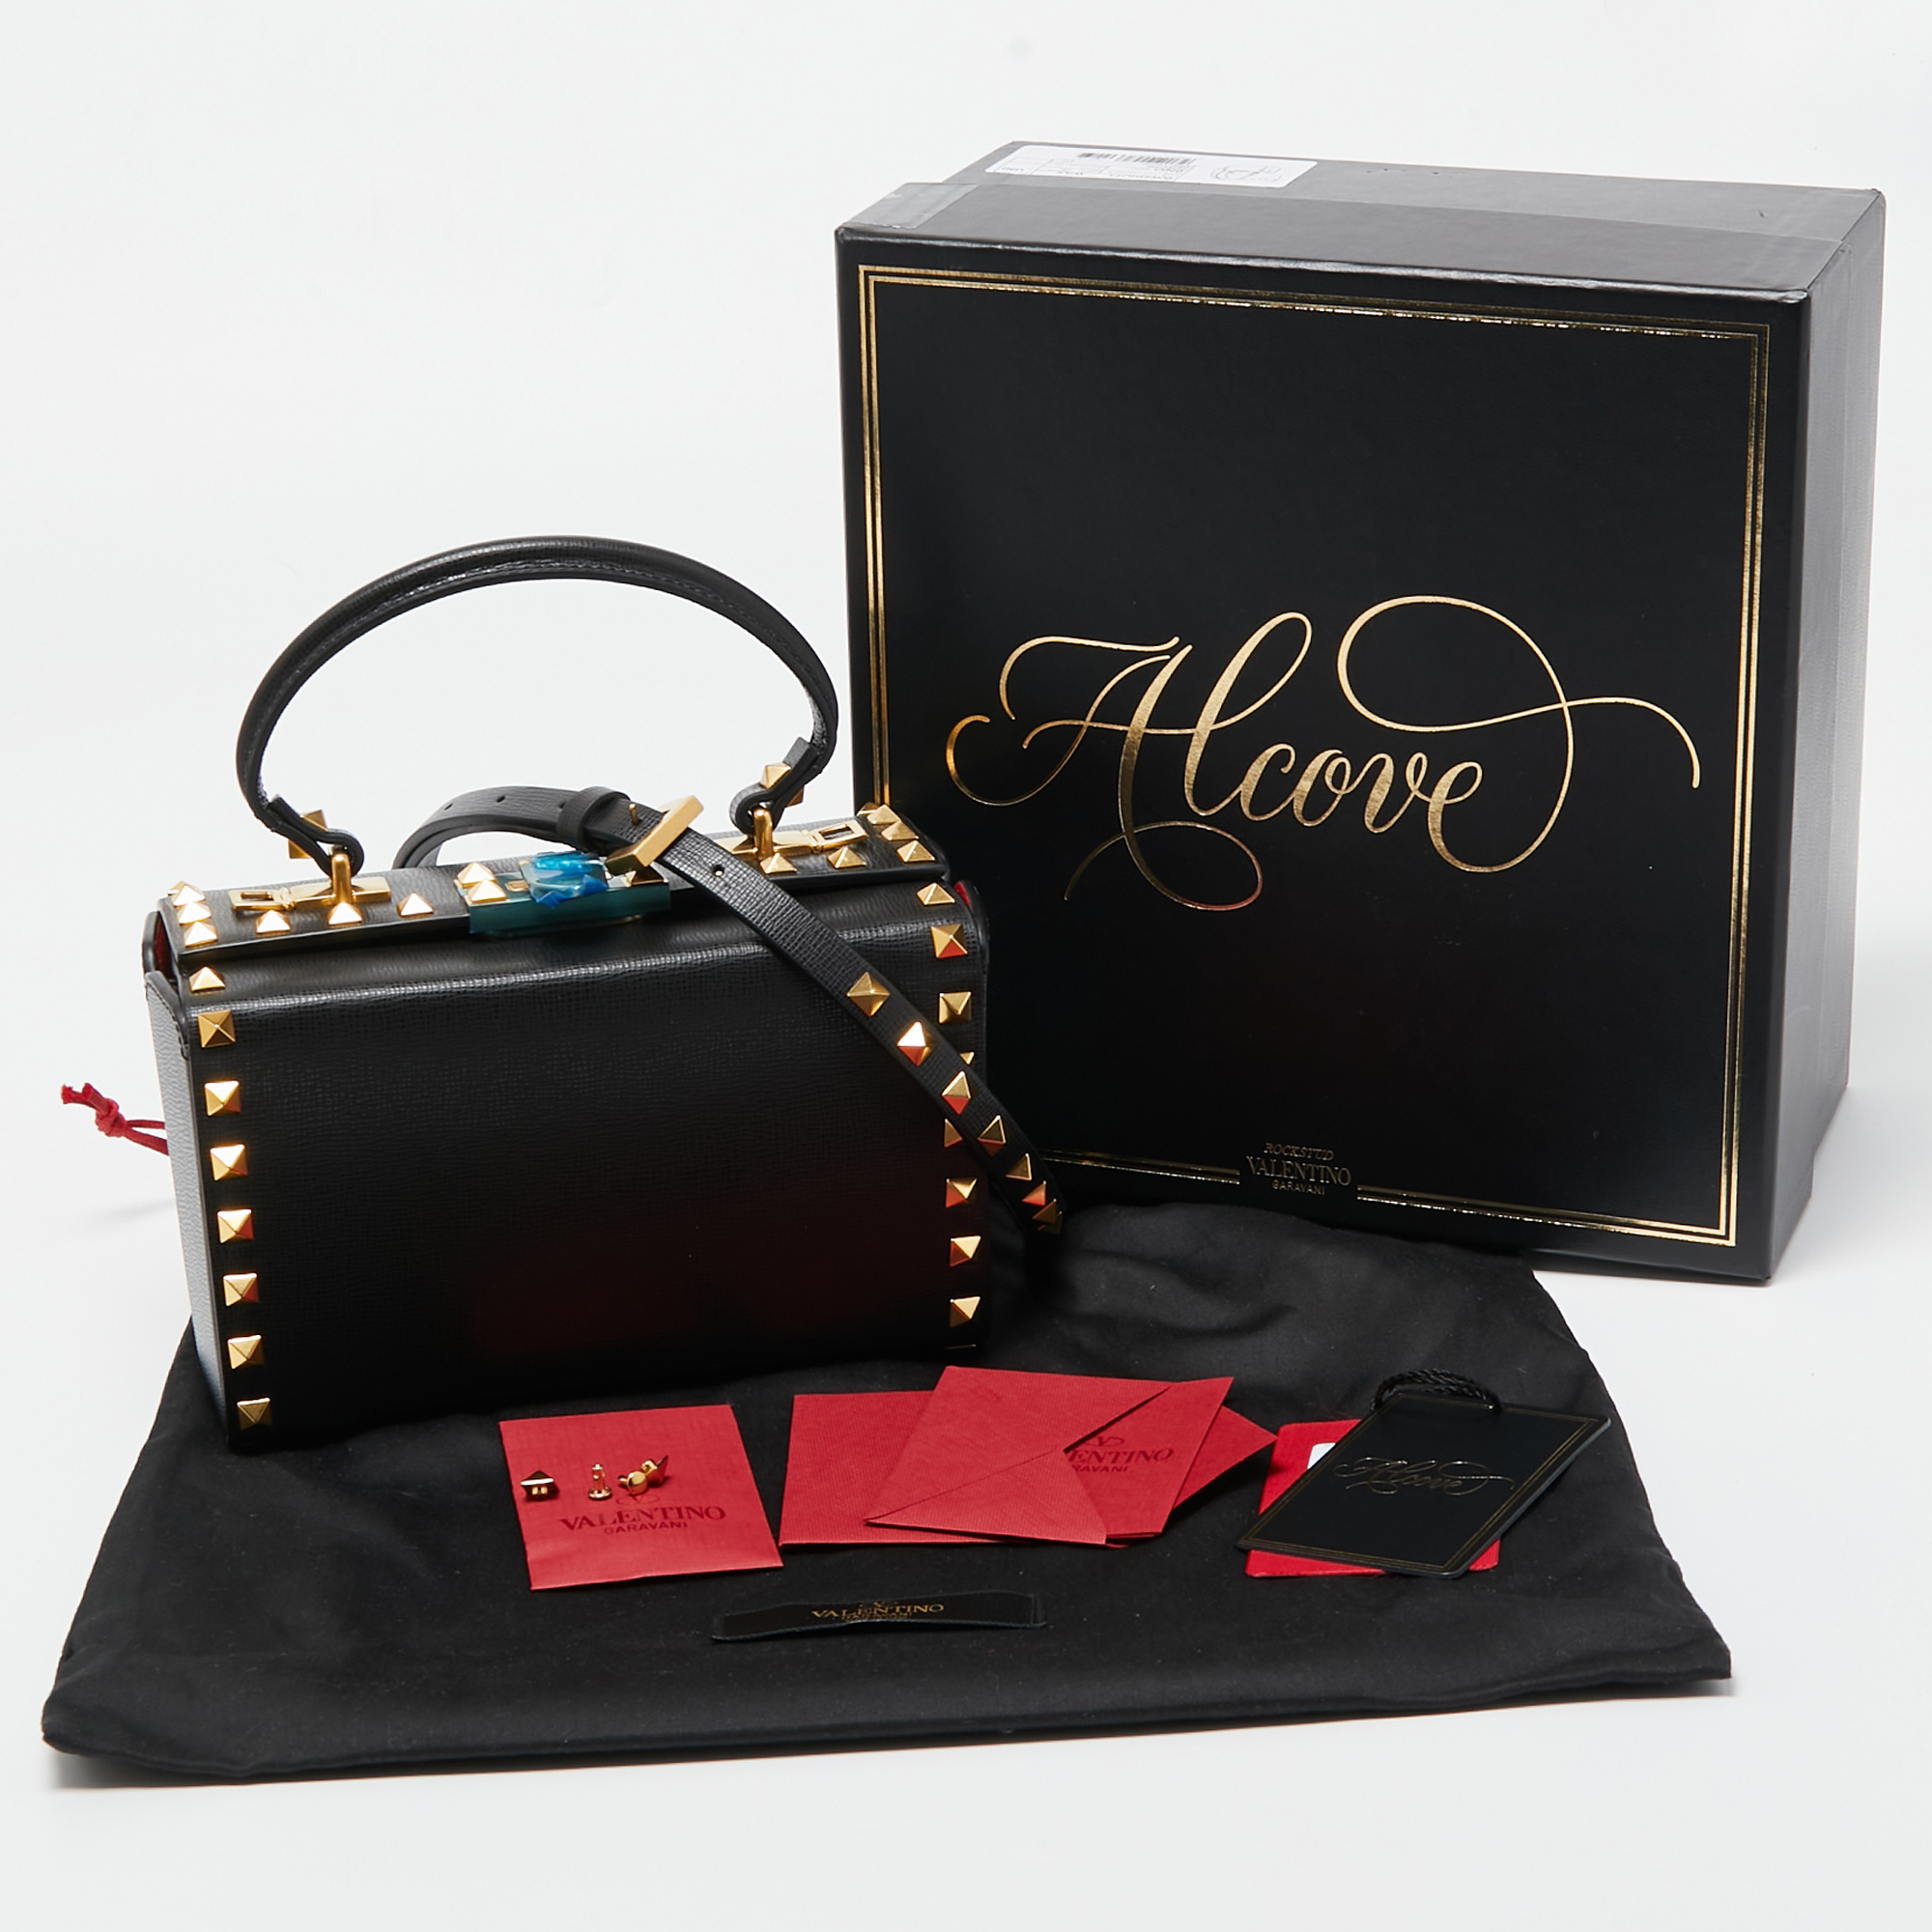 Valentino Black Leather Rockstud Alcove Box Top Handle Bag